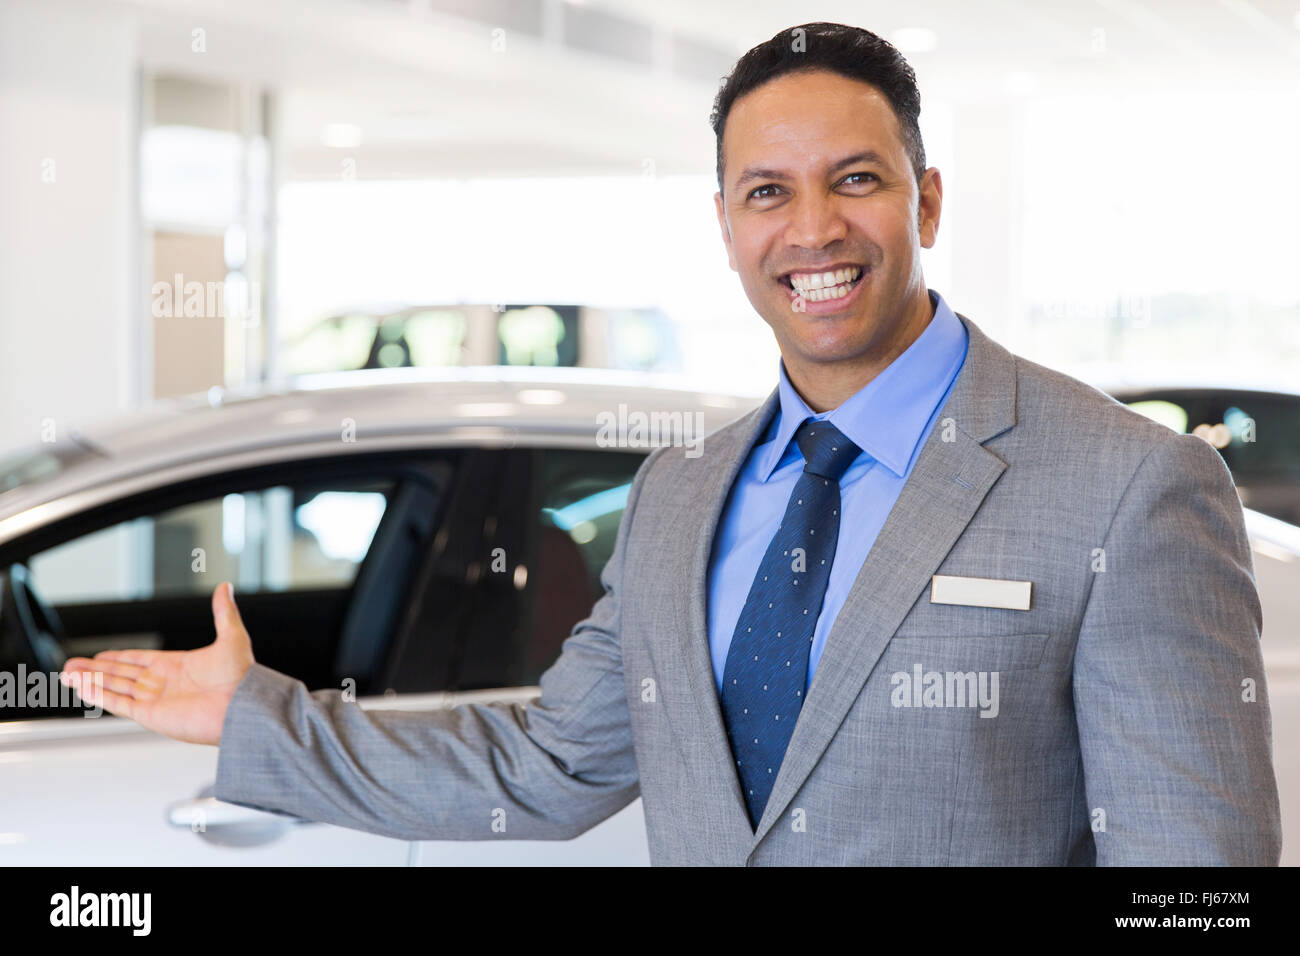 friendly car salesman welcoming gesture at car dealership Stock Photo